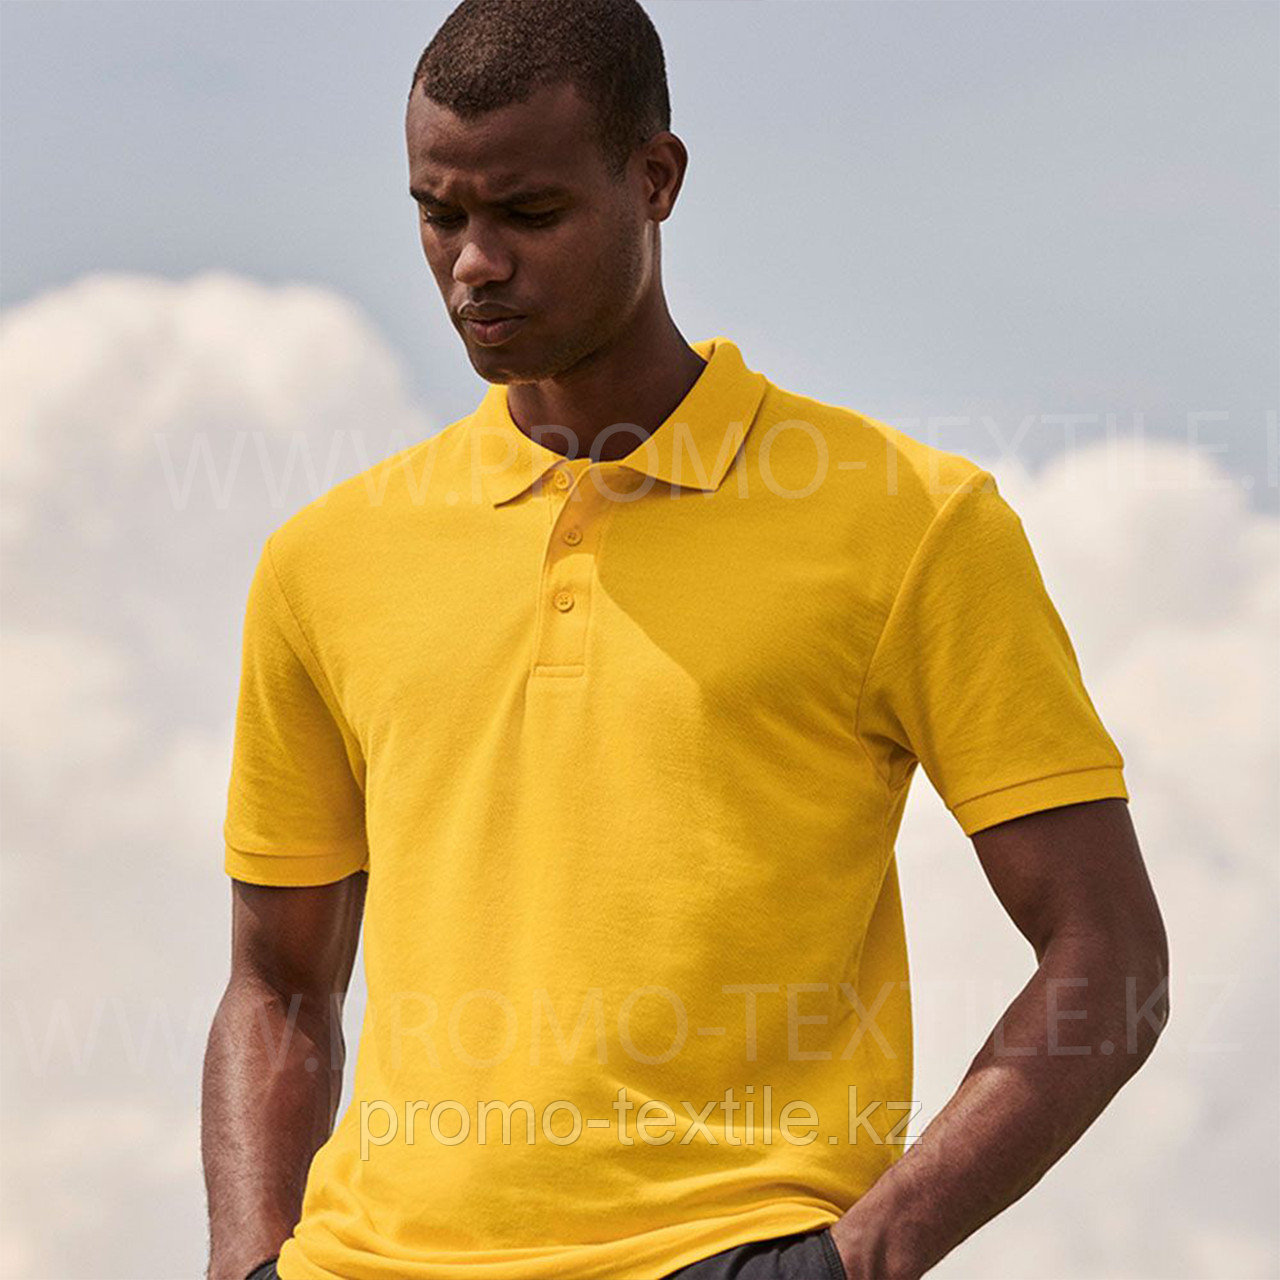 Футболка поло желтого цвета | Поло футболка желтая